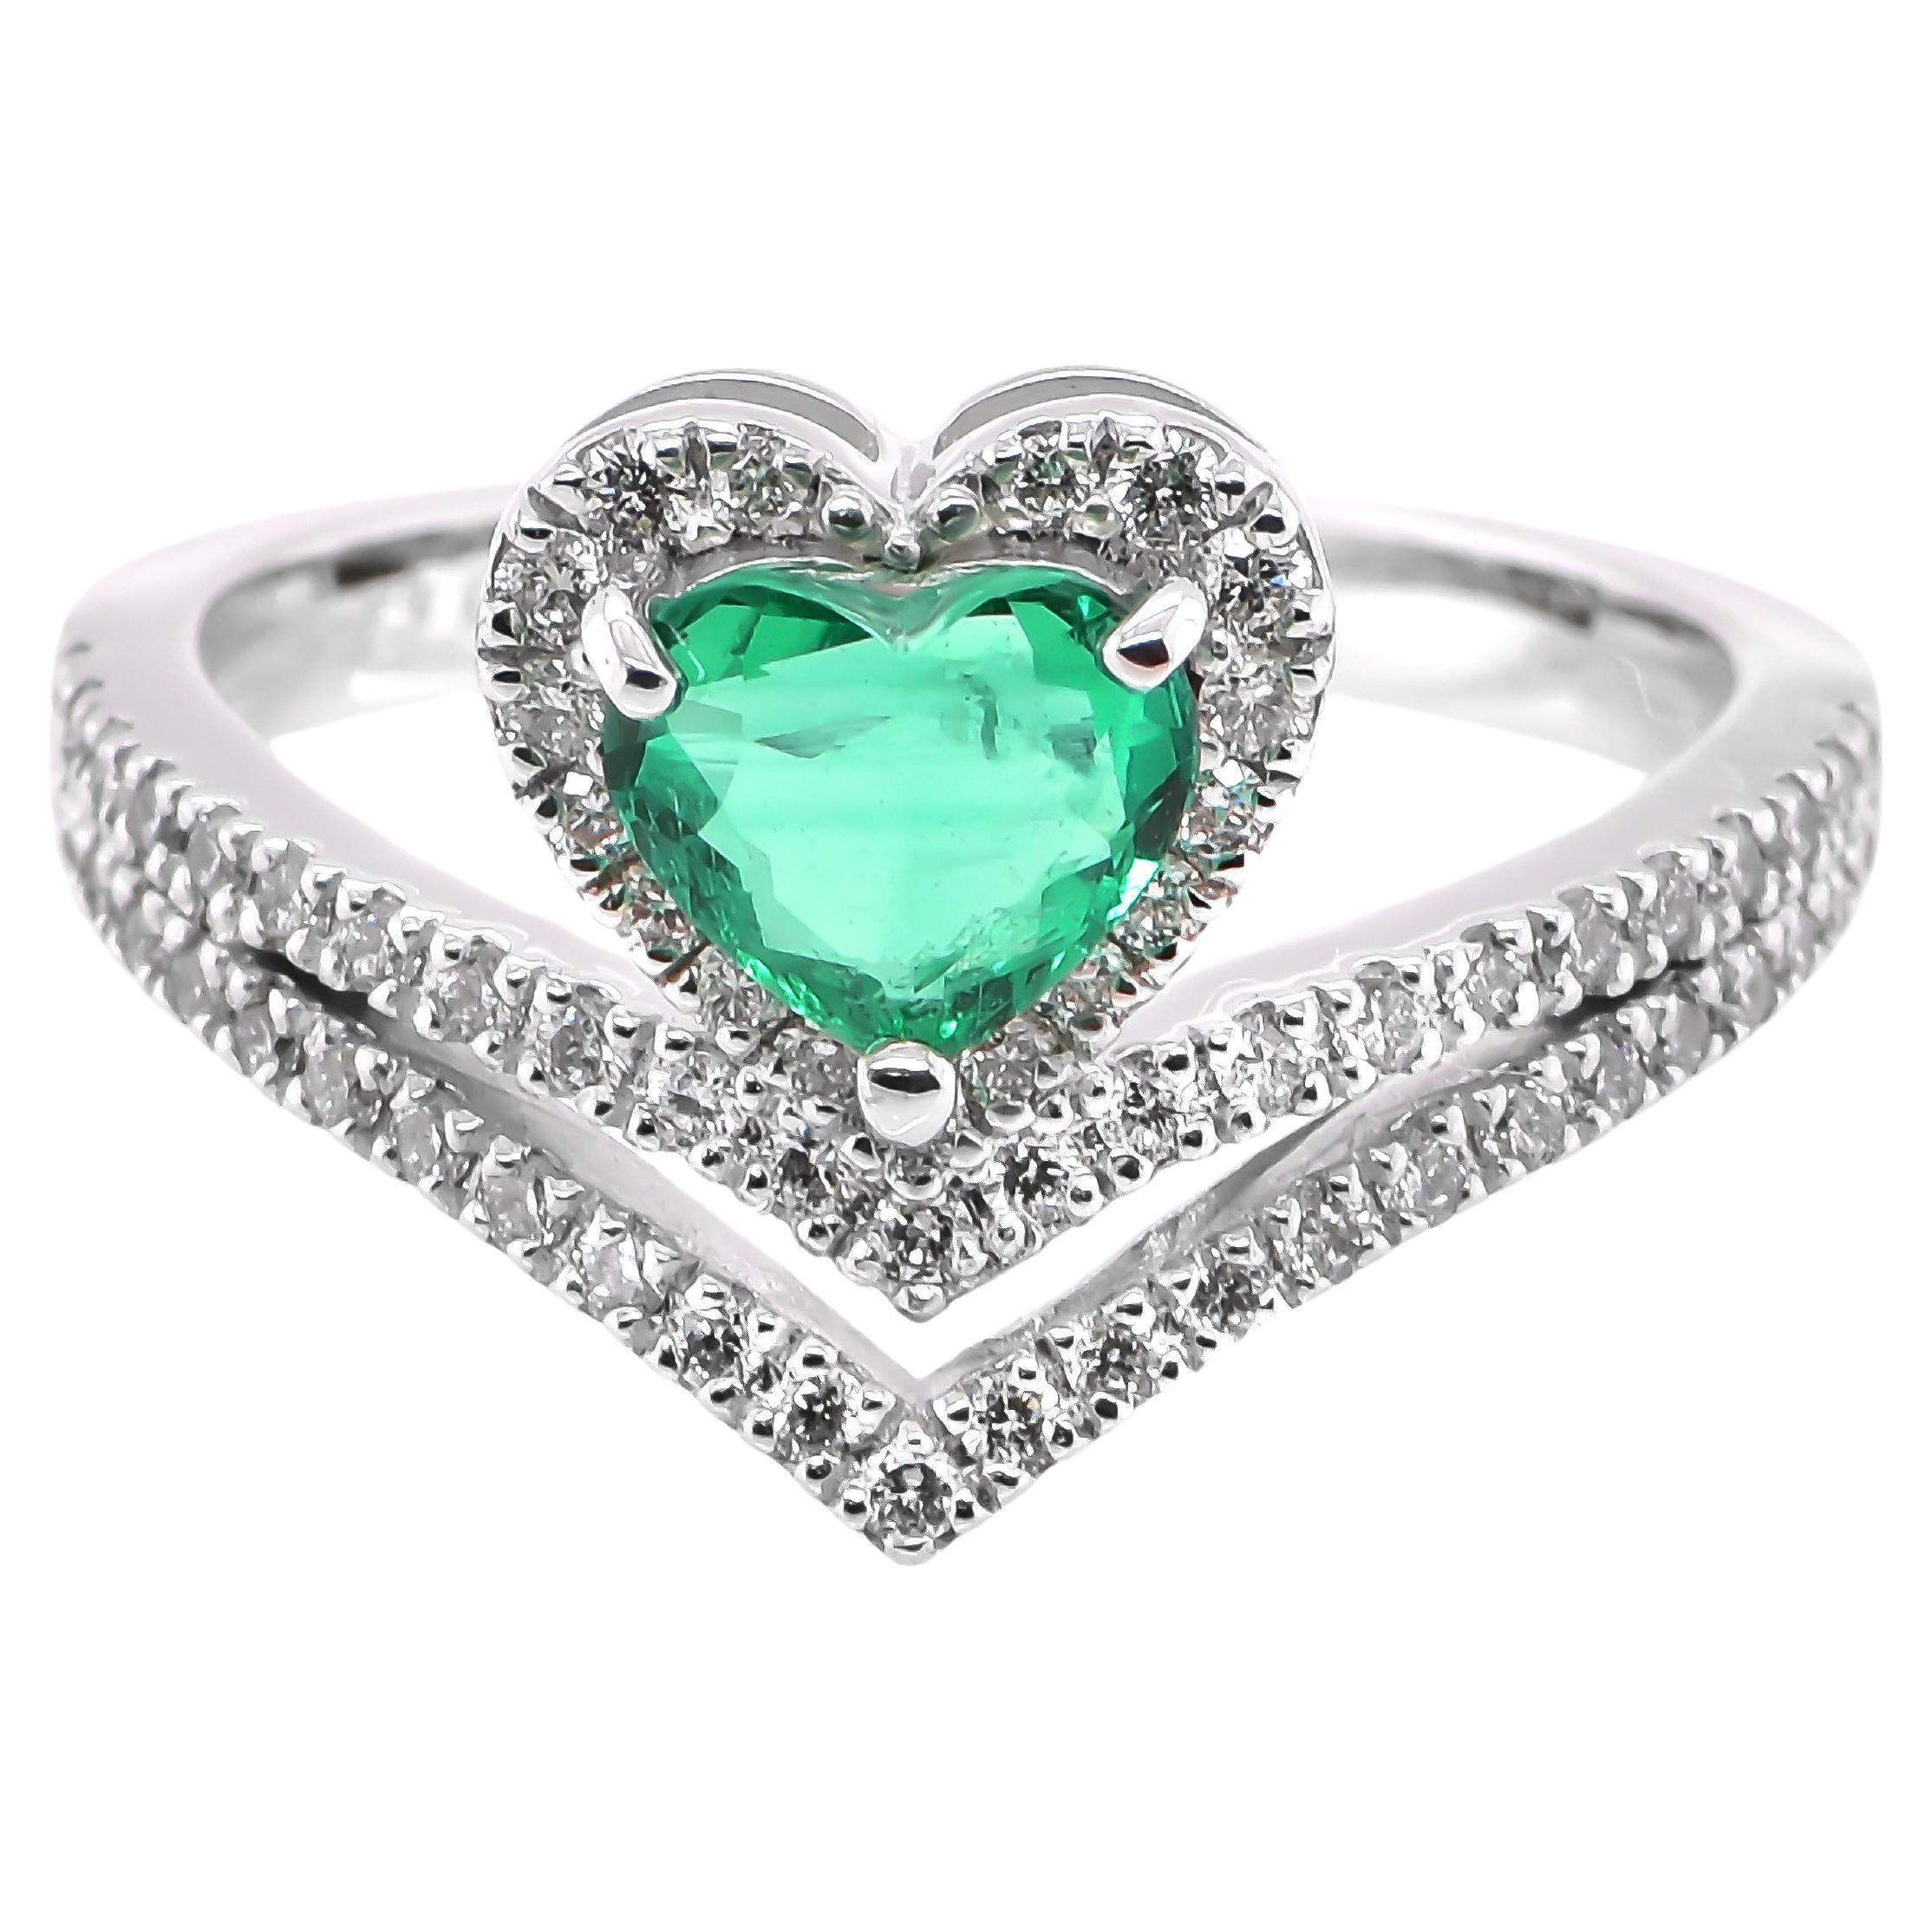 0.65 Carat Emerald and Diamond Tiara Cocktail Ring Made in Platinum